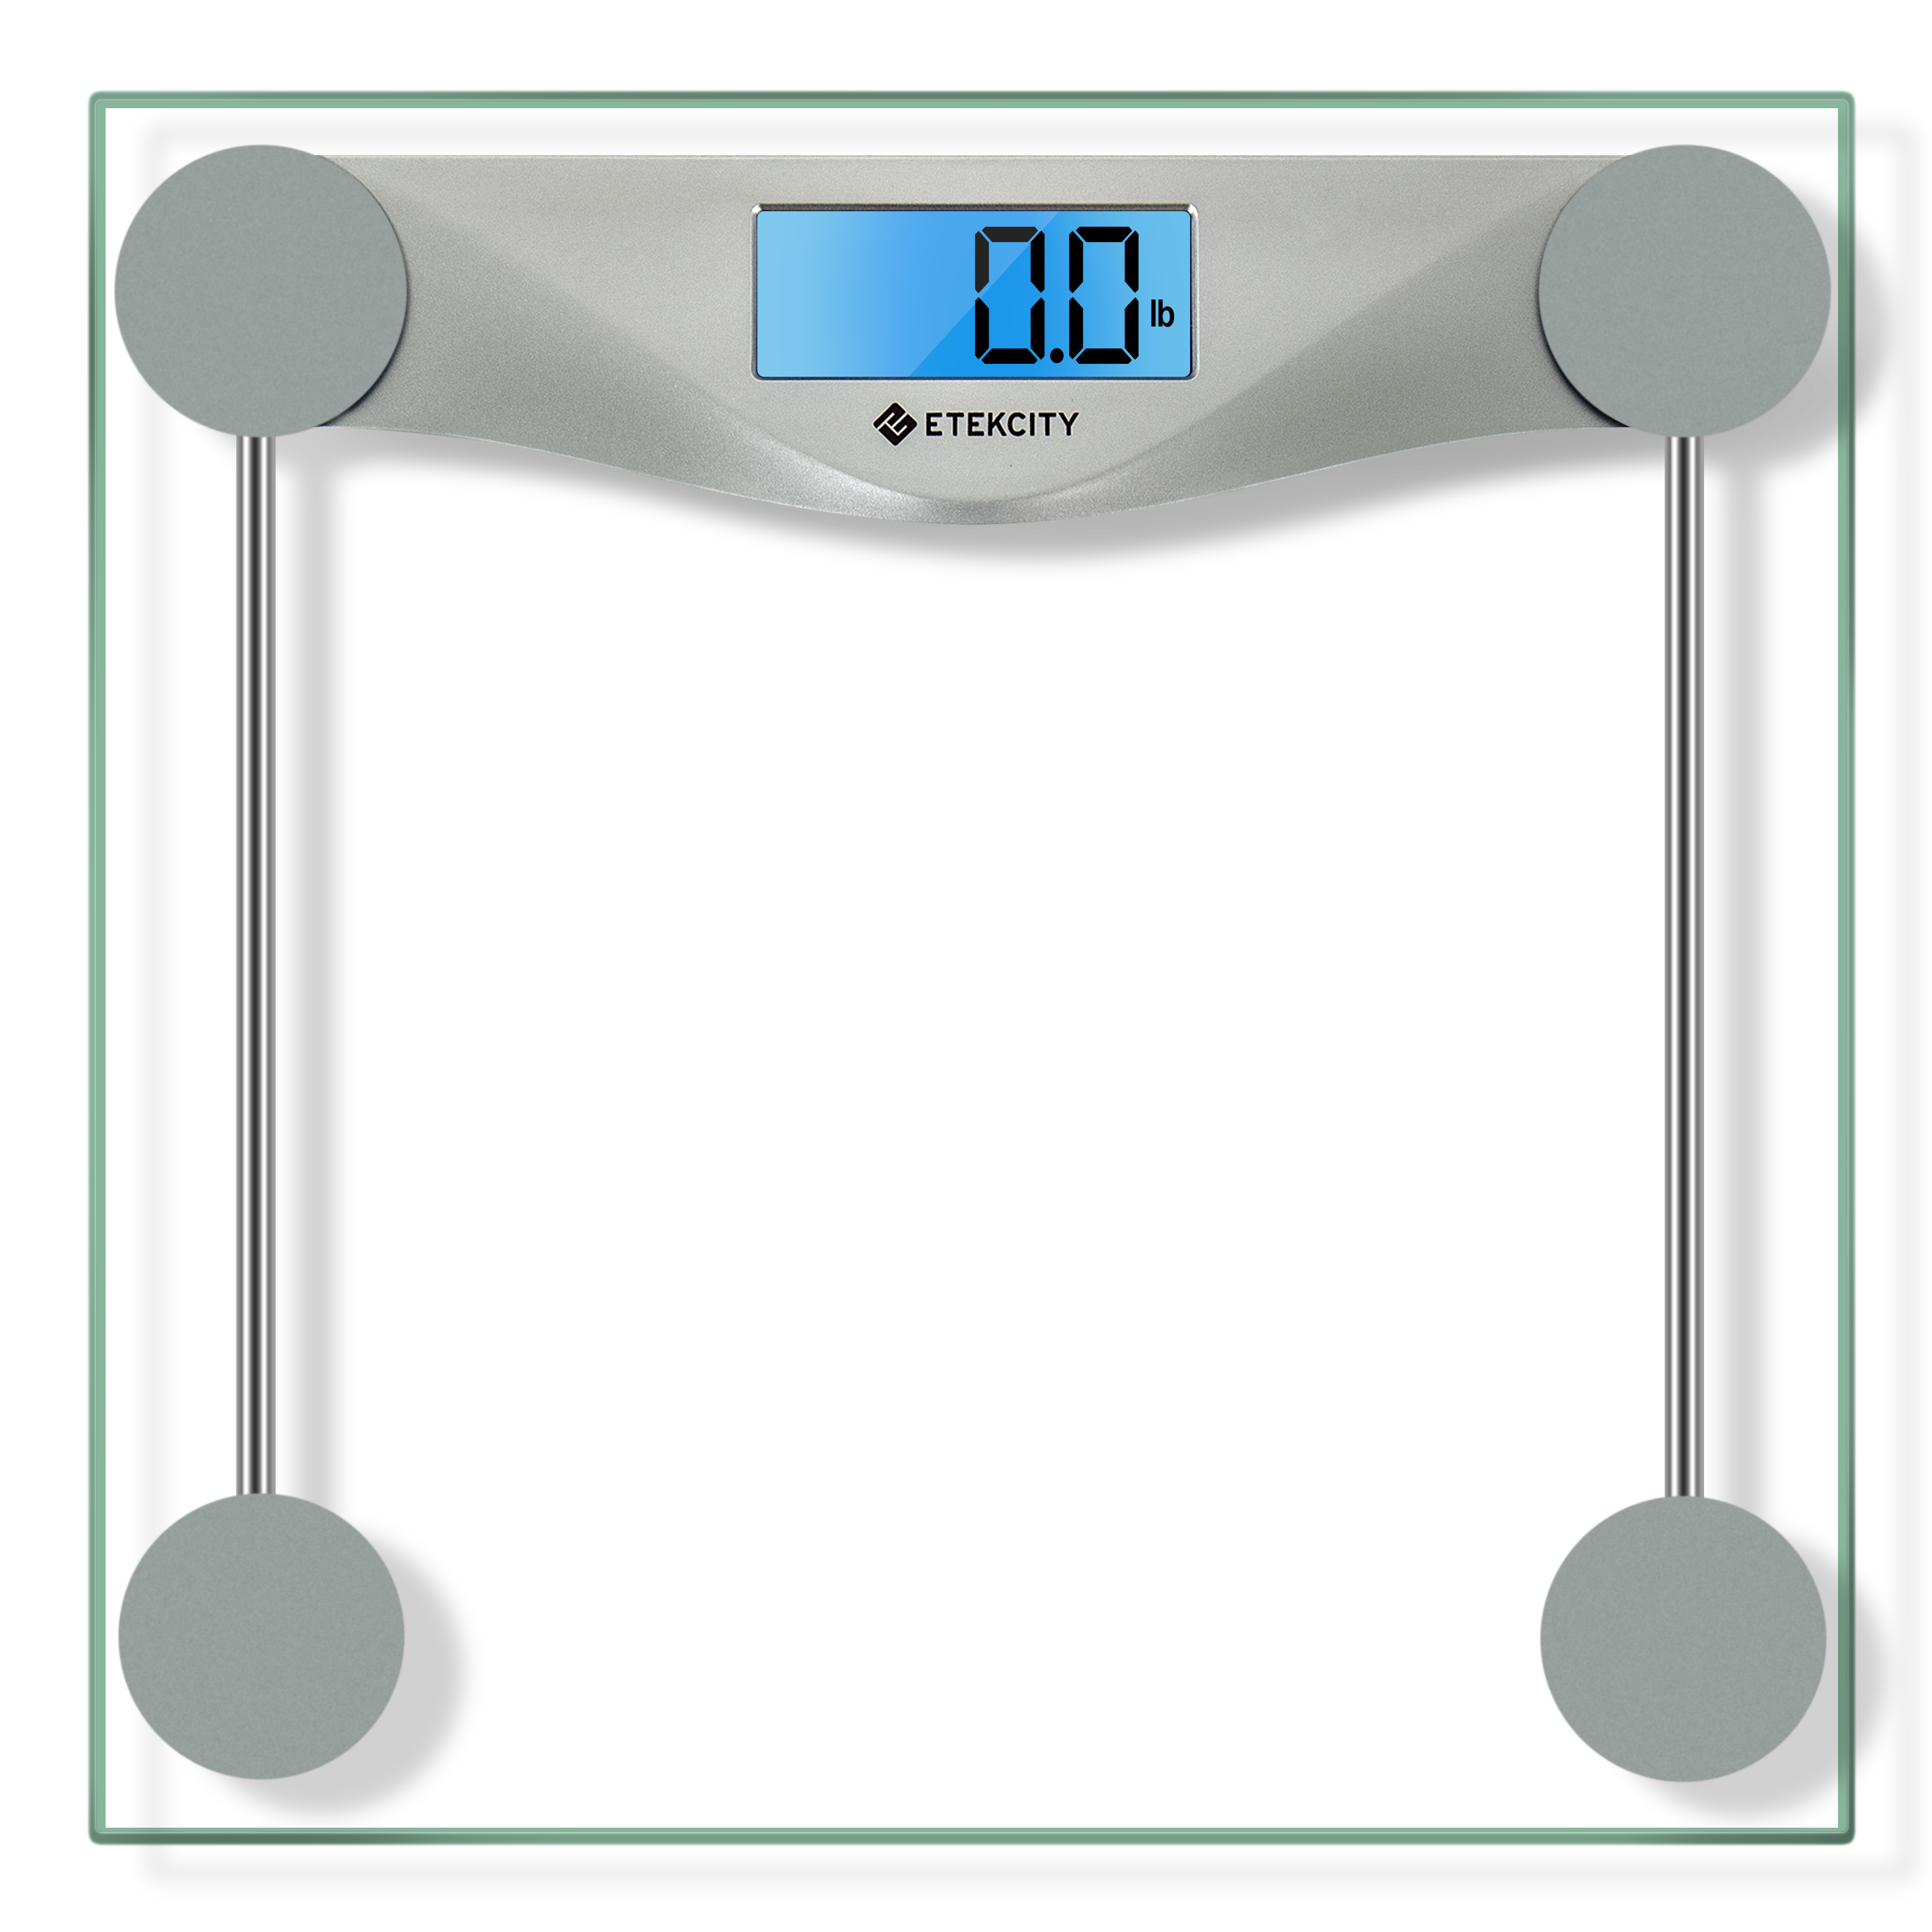 Etekcity Digital Body Weight Bathroom Scale,s - Costless WHOLESALE - Online  Shopping!